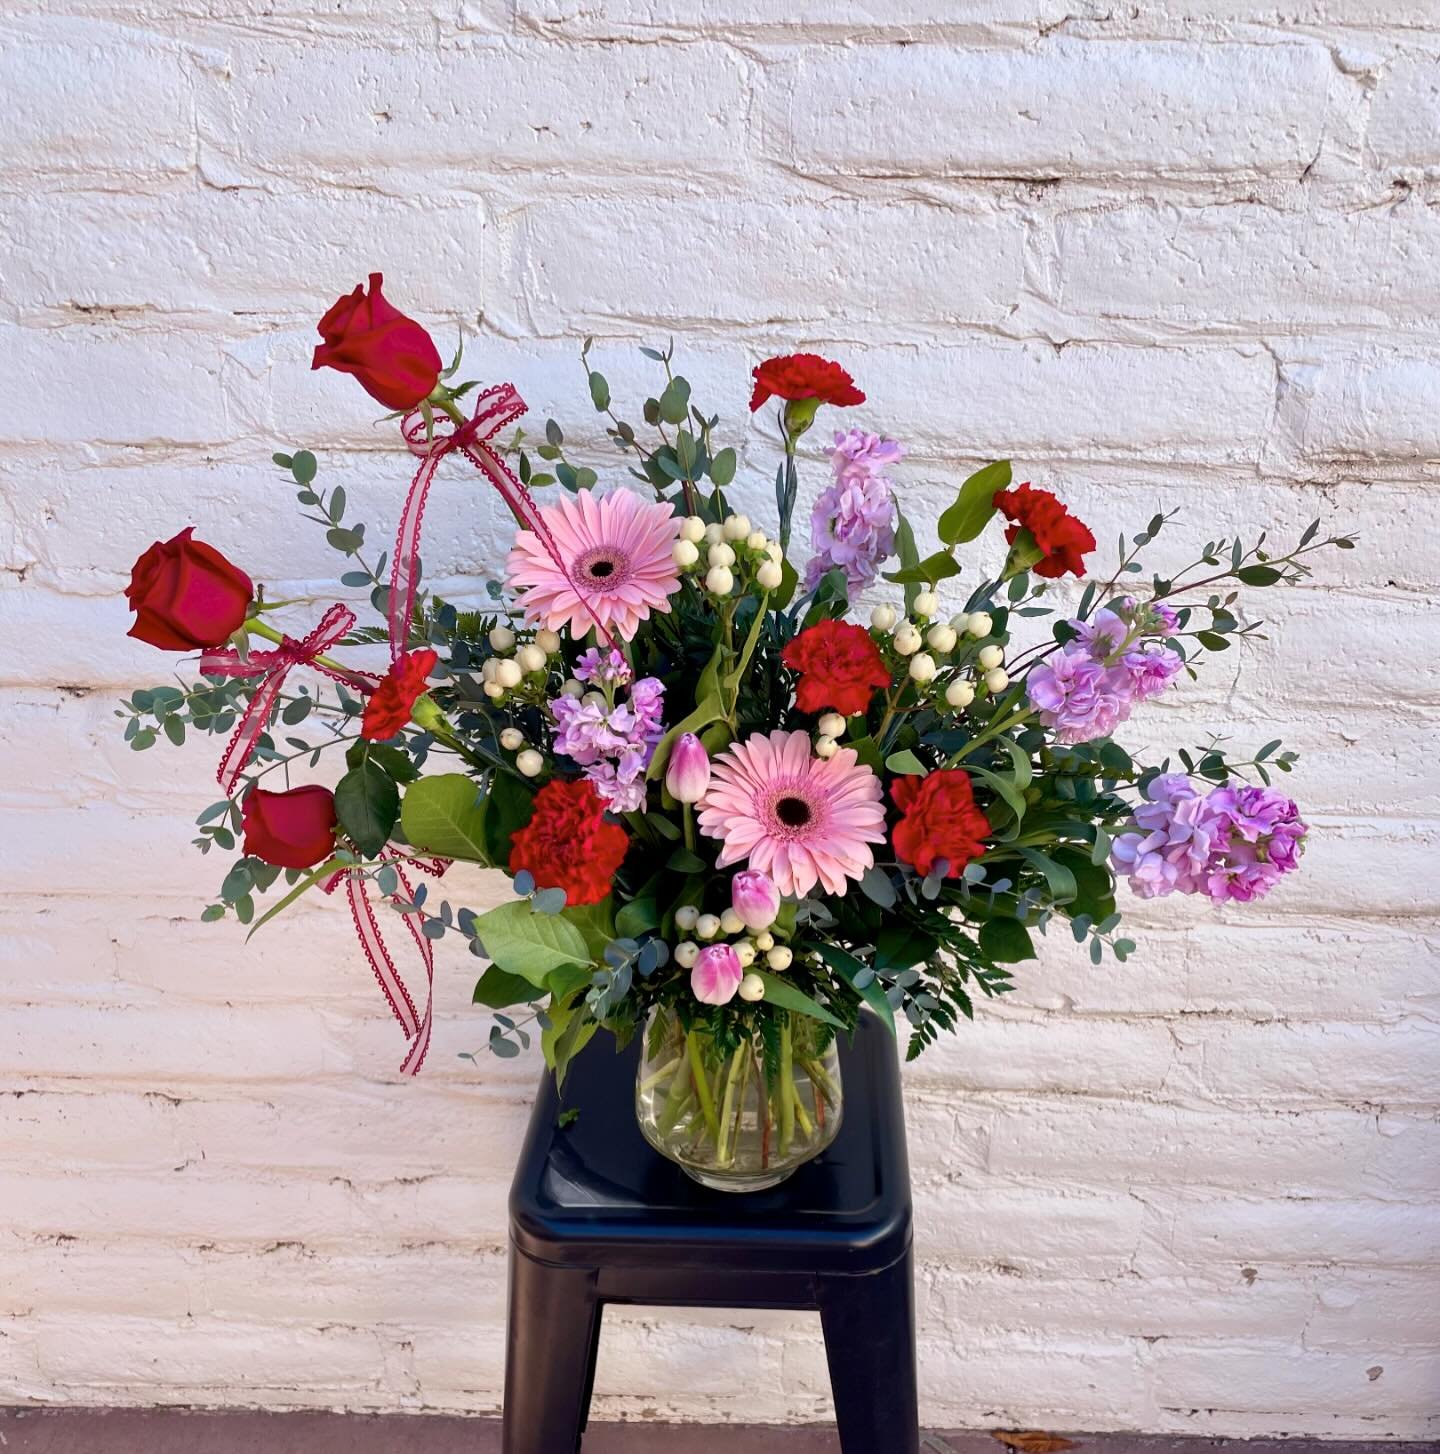 Lily's Floral & Gift 381 W 200 N, Richfield Utah 84701